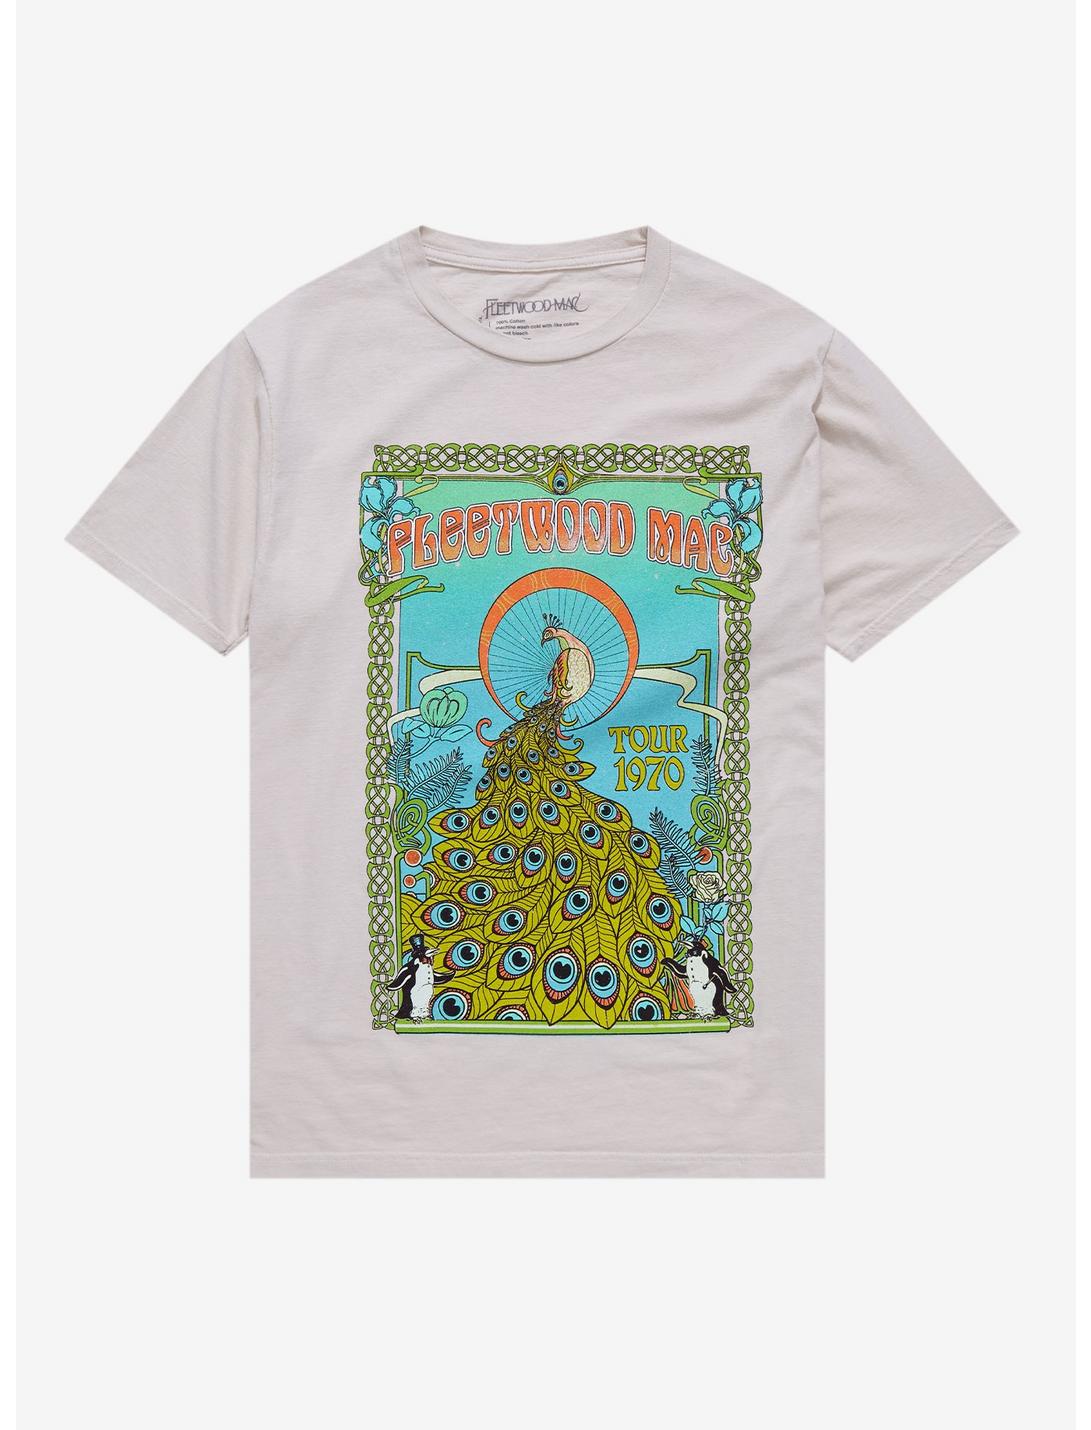 Fleetwood Mac Peacock Tour Boyfriend Fit Girls T-Shirt, NATURAL, hi-res